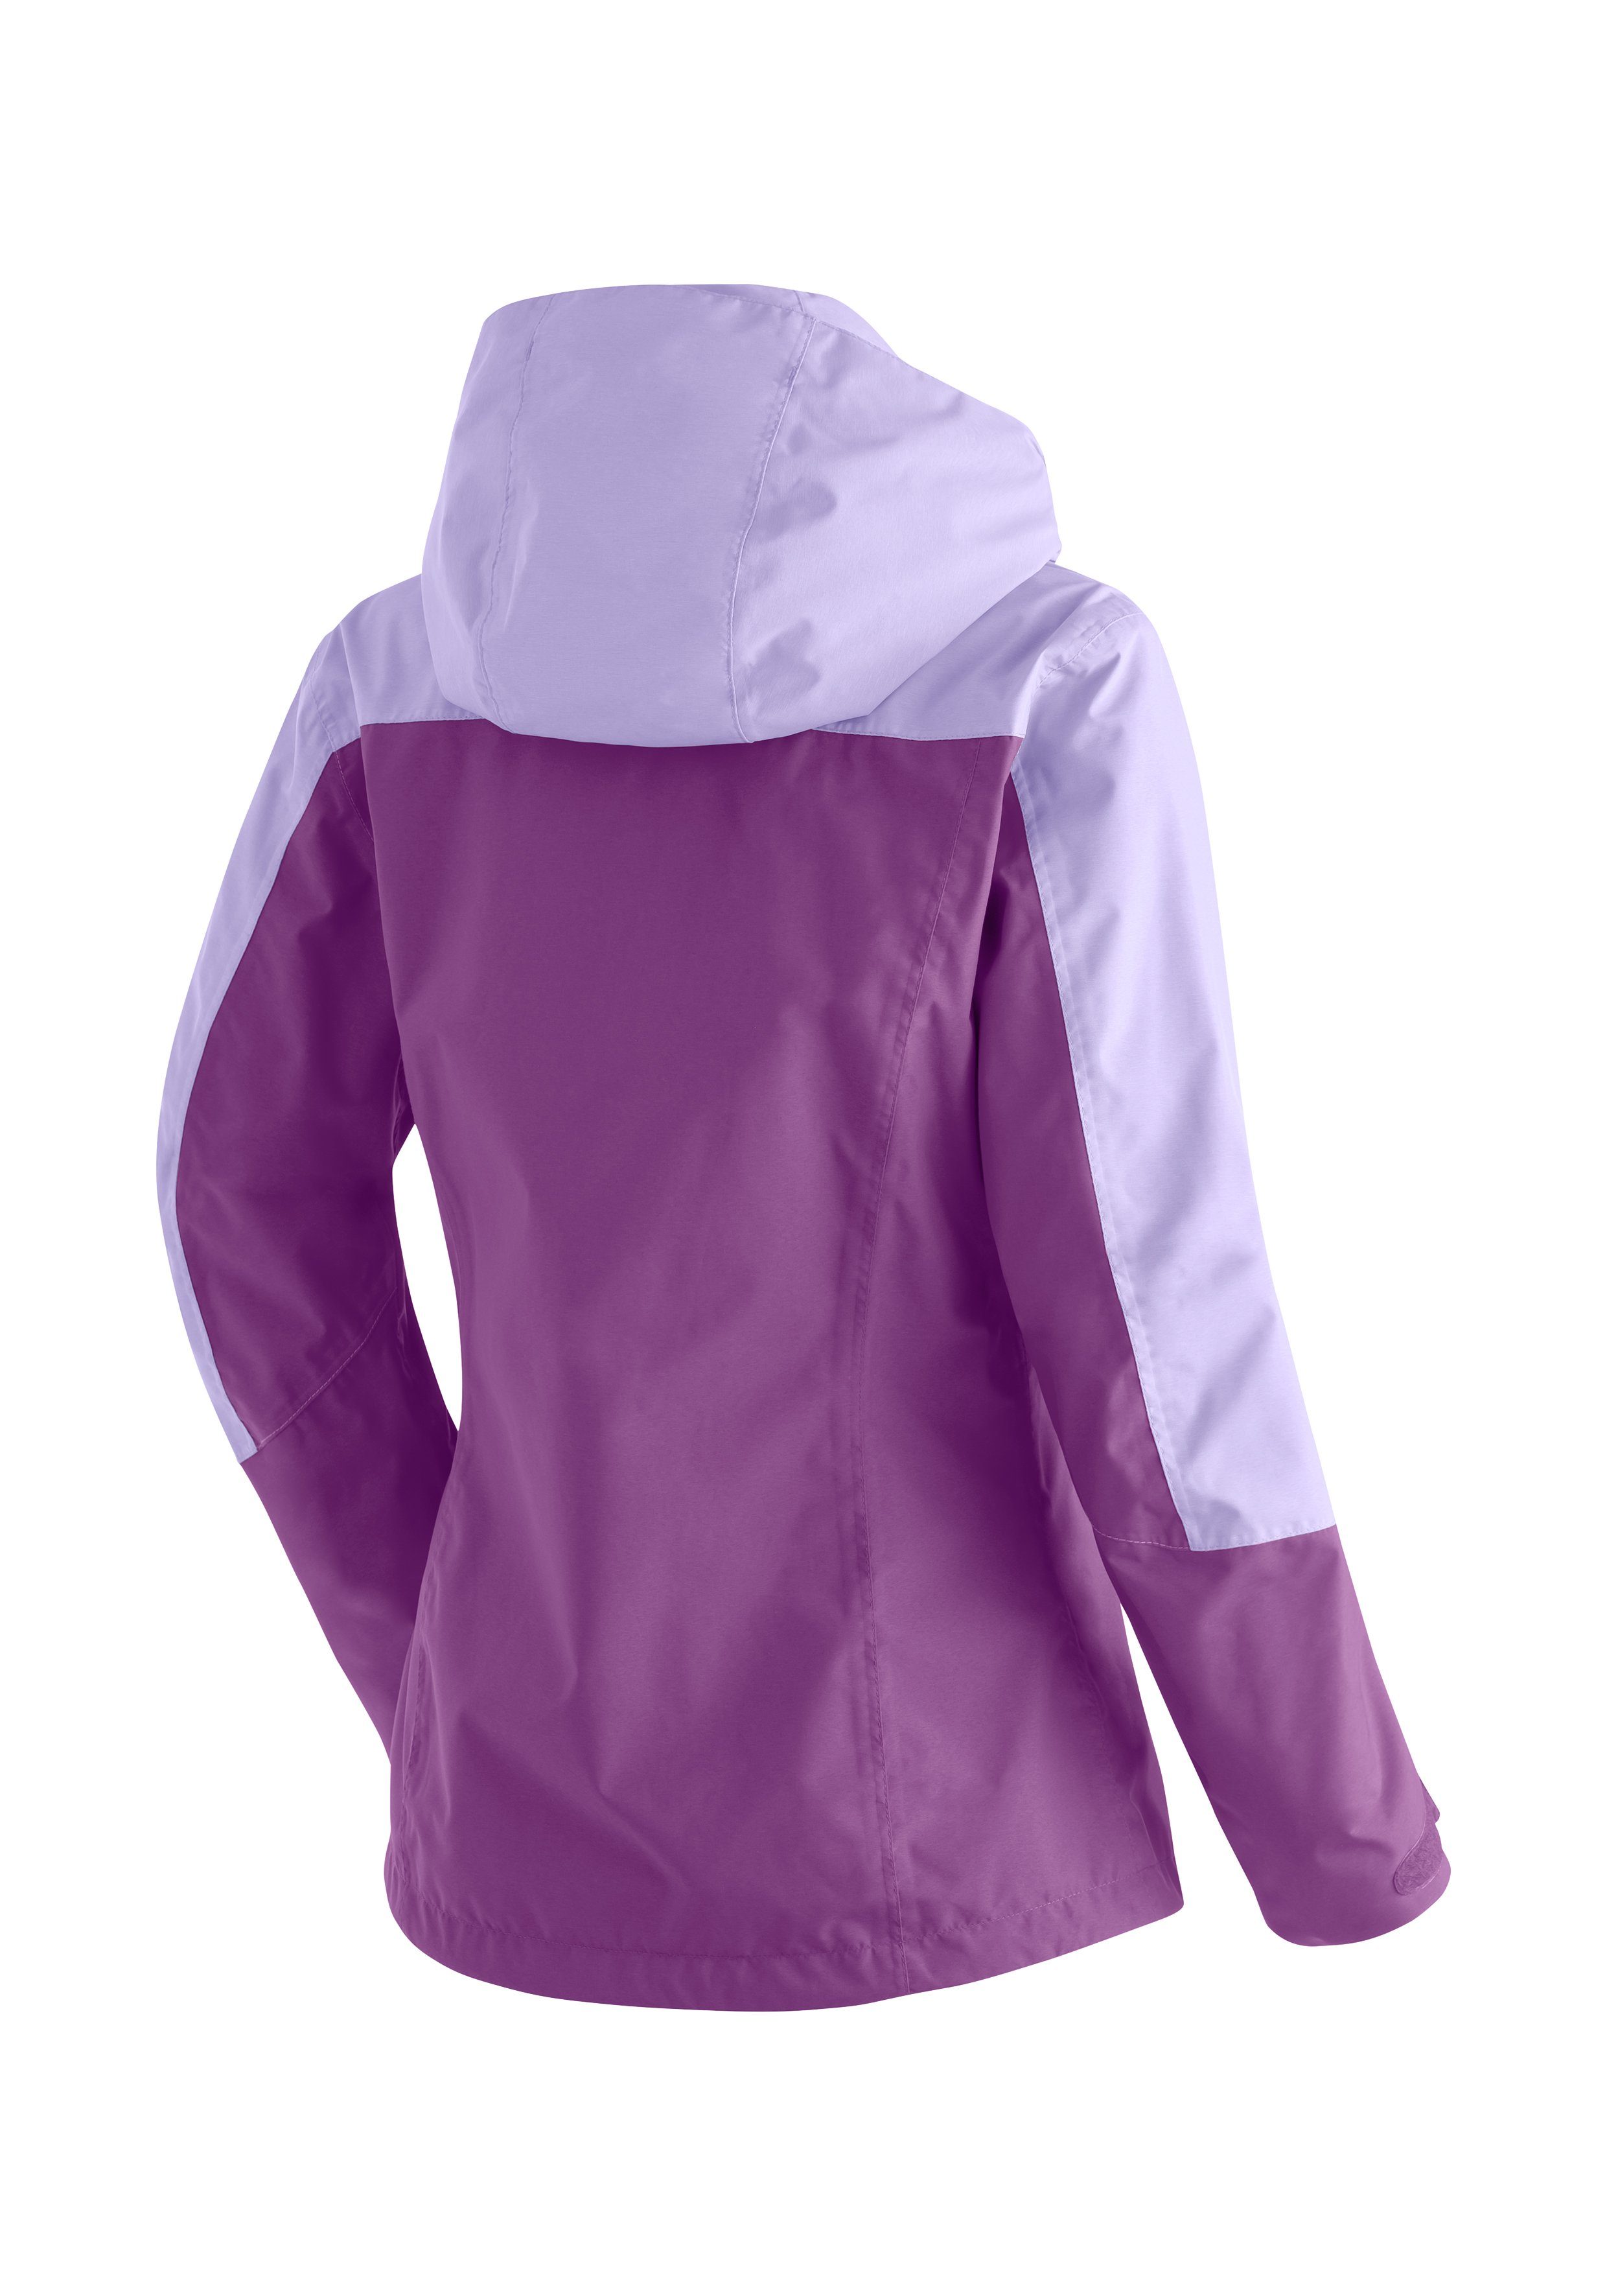 W aus Outdoorjacke Material atmungsaktivem Maier Partu Funktionsjacke Sports purpurviolett Wasserdichte